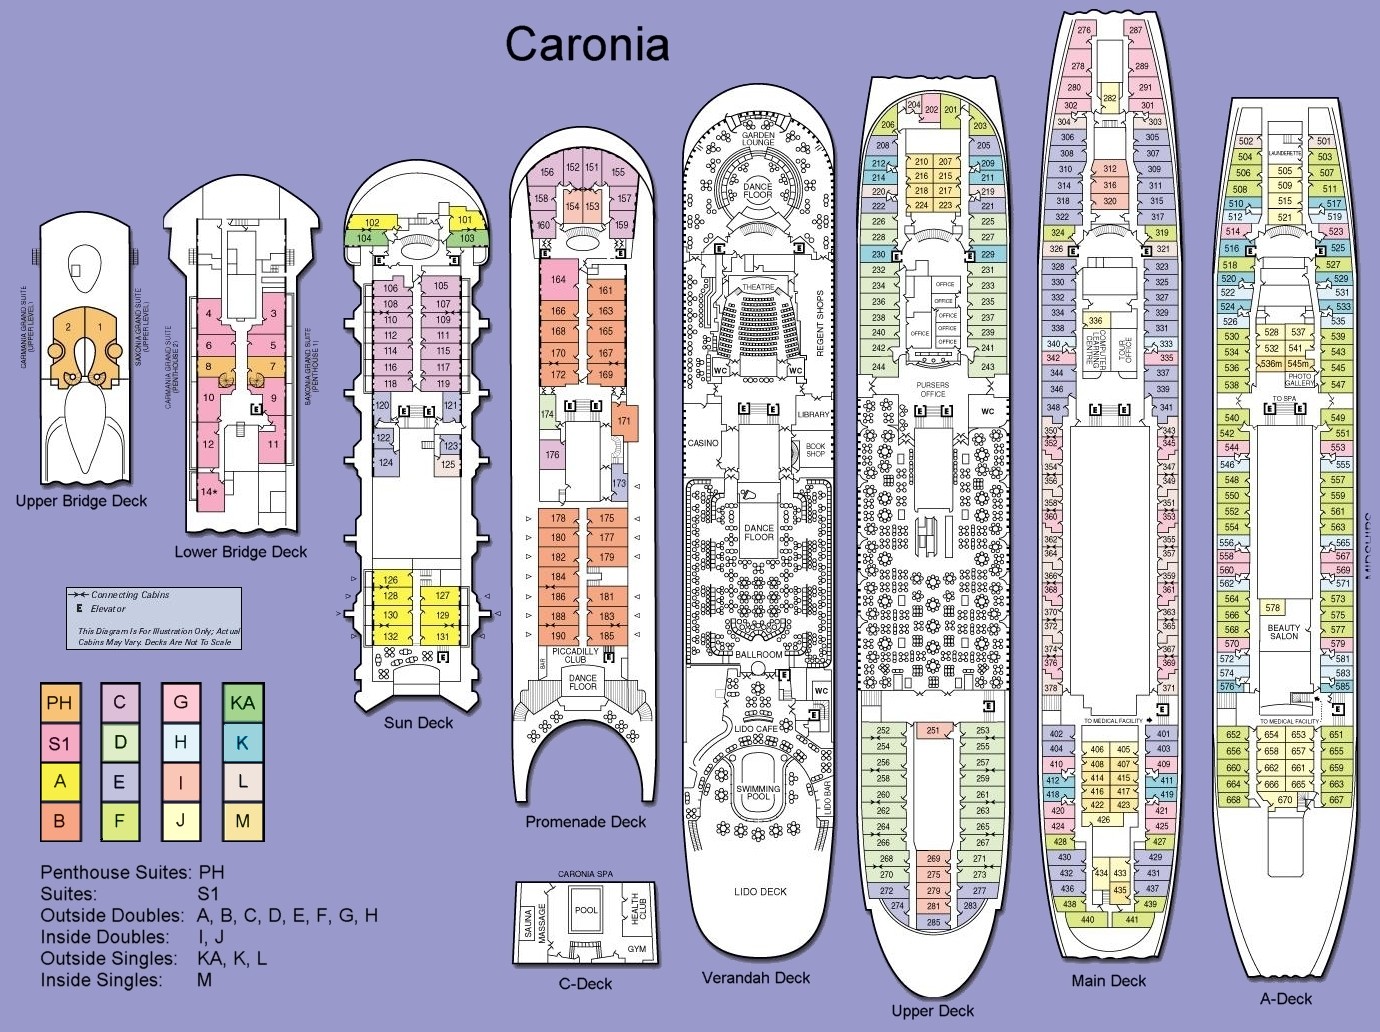 Cunard Cruise Line, Cunard Caronia Deck Plans